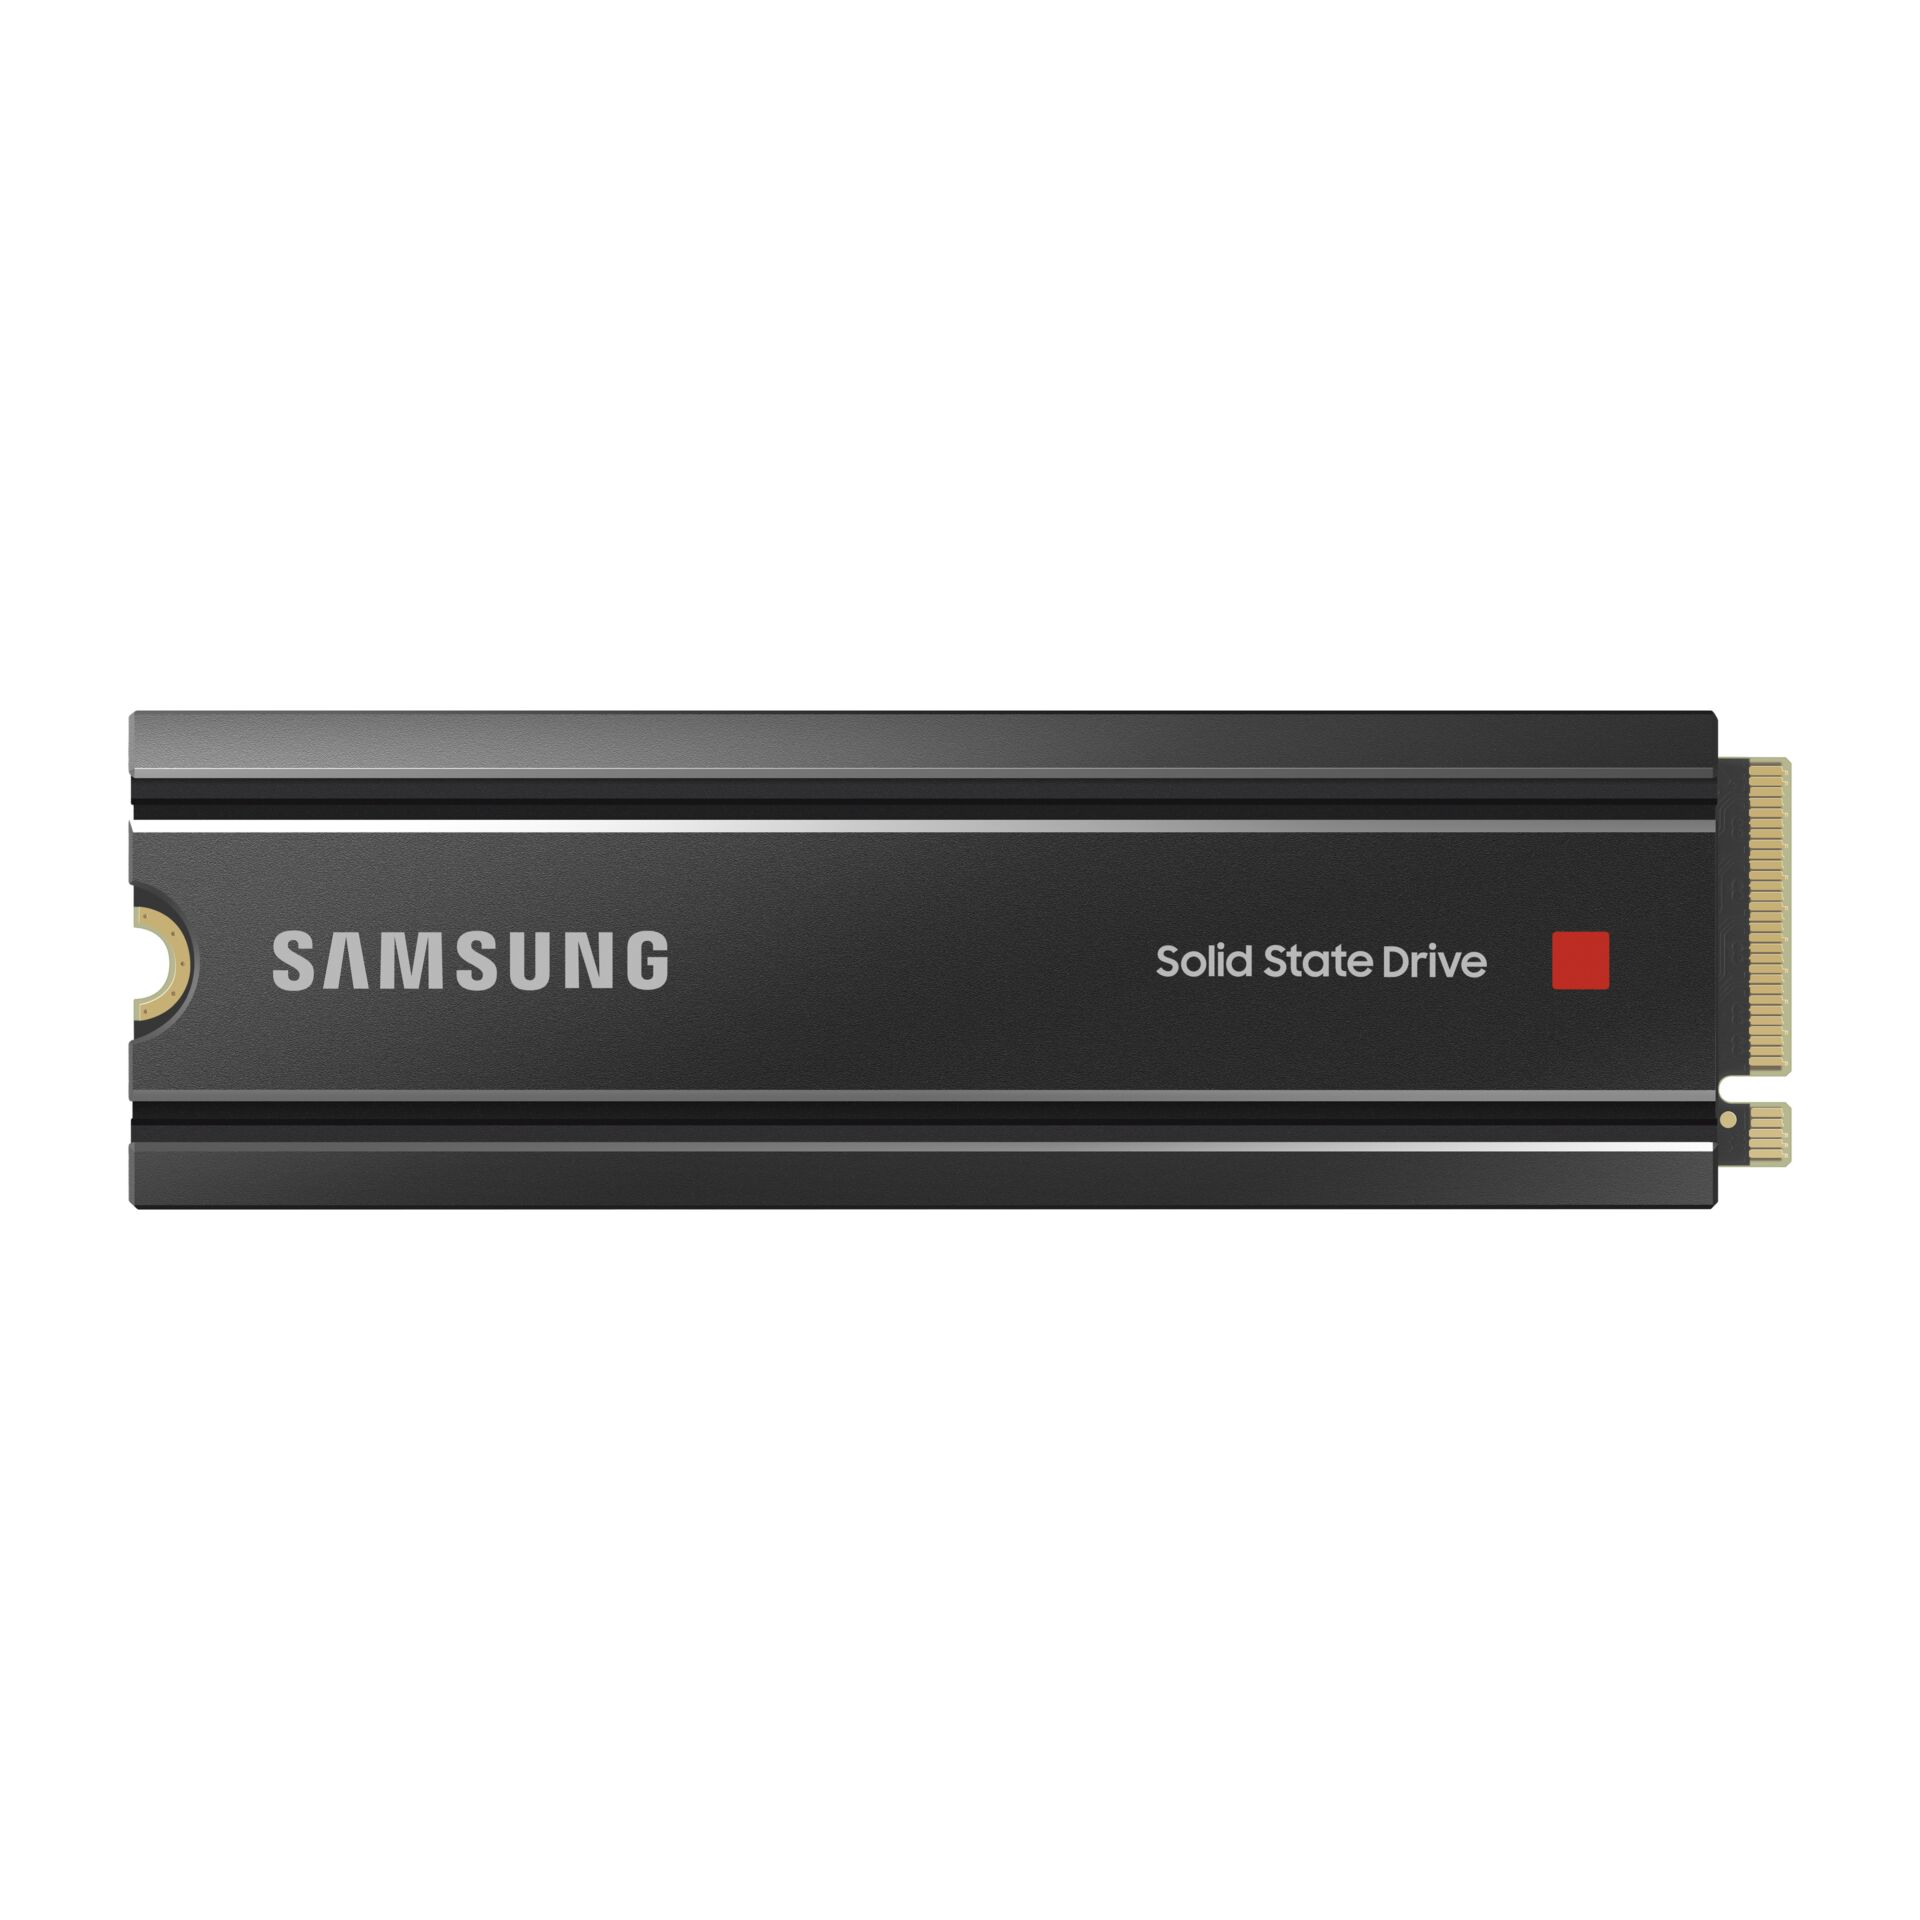 1.0 TB SSD Samsung 980 PRO, M.2/M-Key (PCIe 4.0 x4), lesen: 7000MB/s, schreiben: 5000MB/s, TBW: 600TB